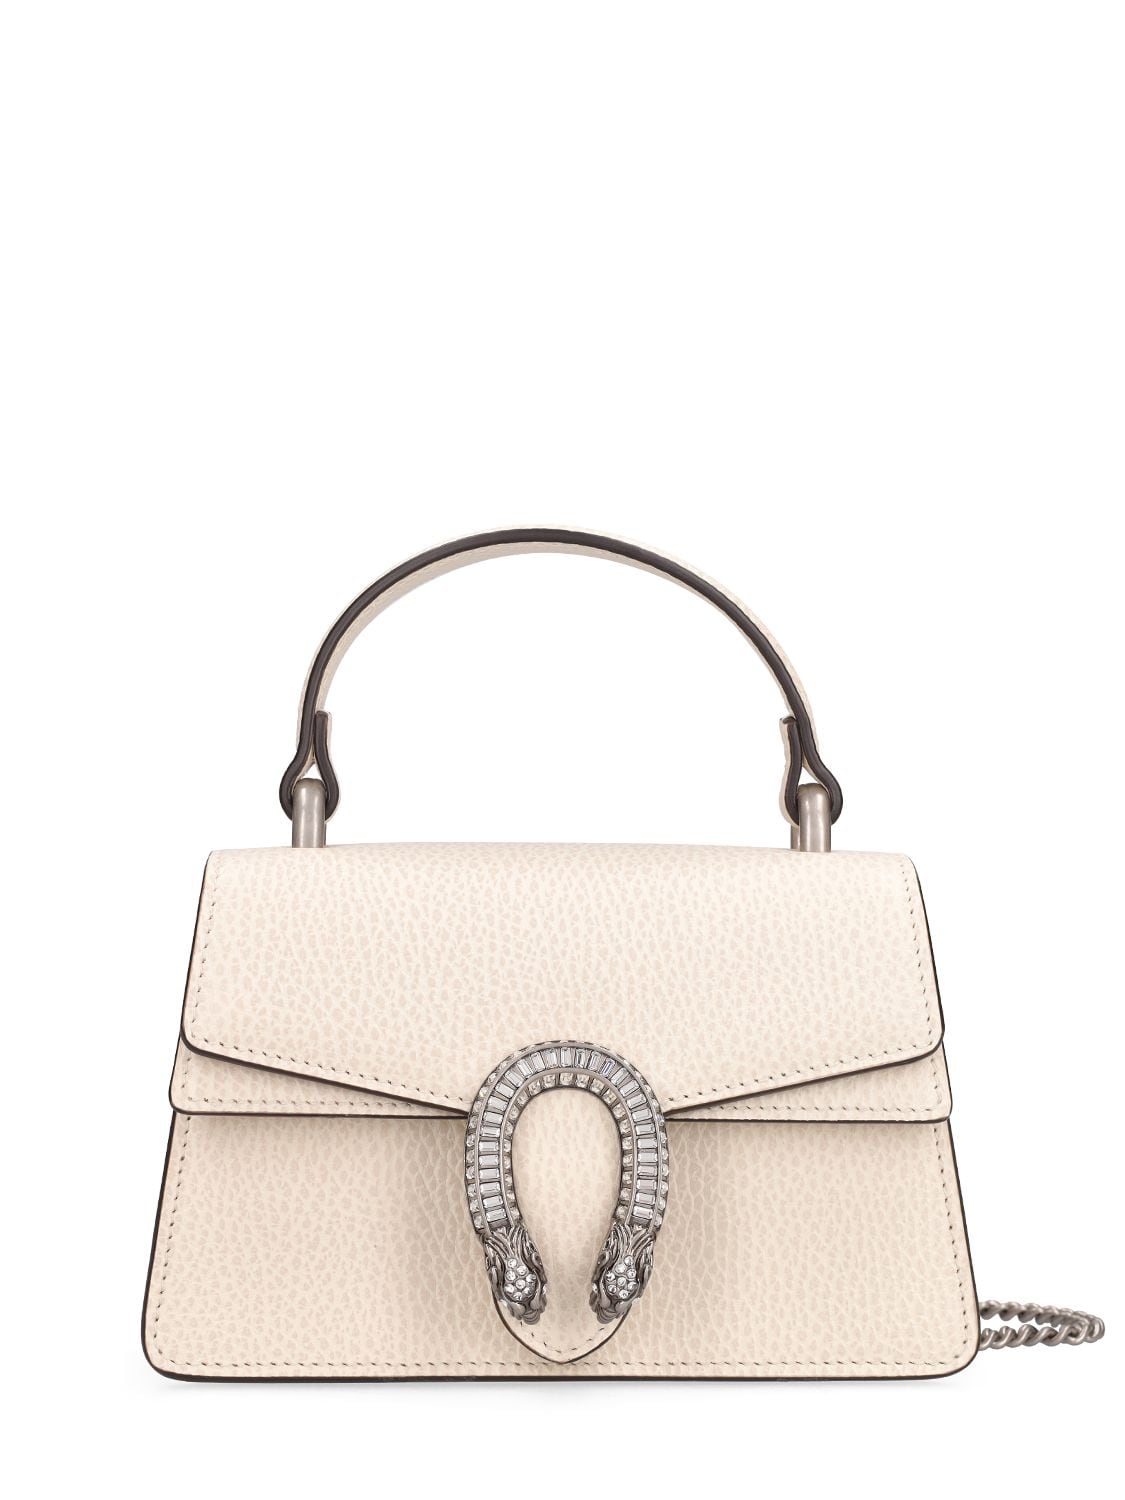 Gucci Super Mini Leather Shoulder Bag In Mystic White